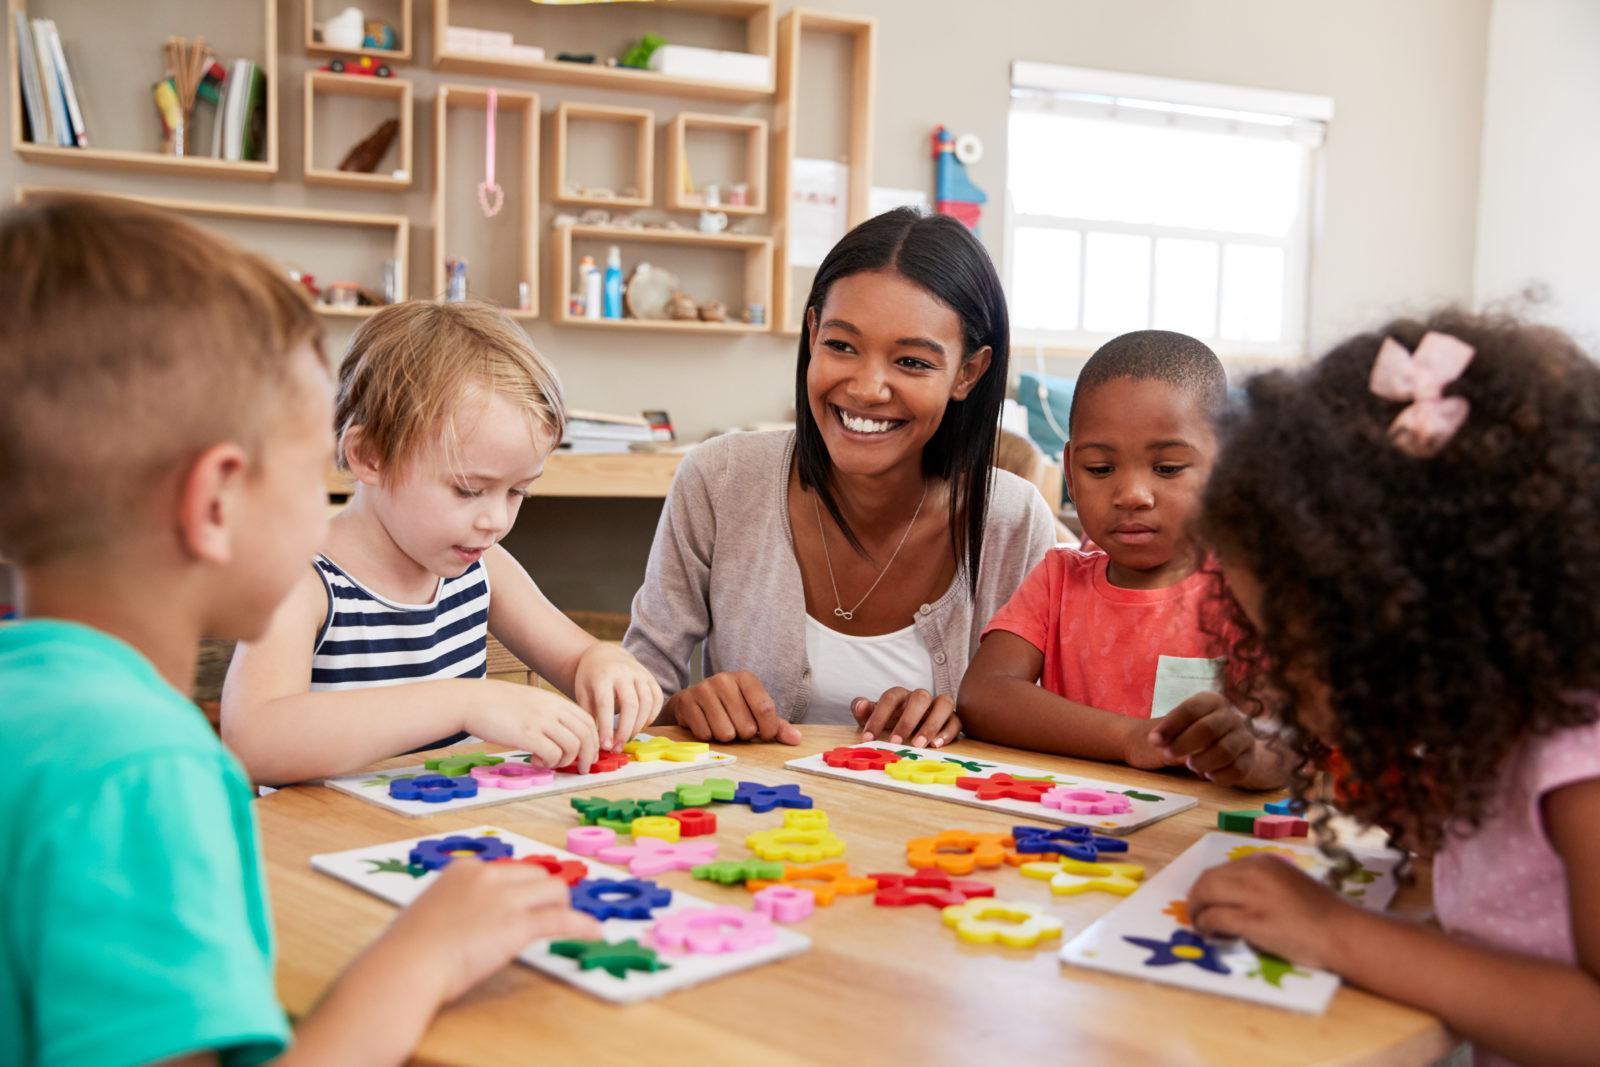 Montessori Schools are Exceptionally Successful. So Why aren’t There